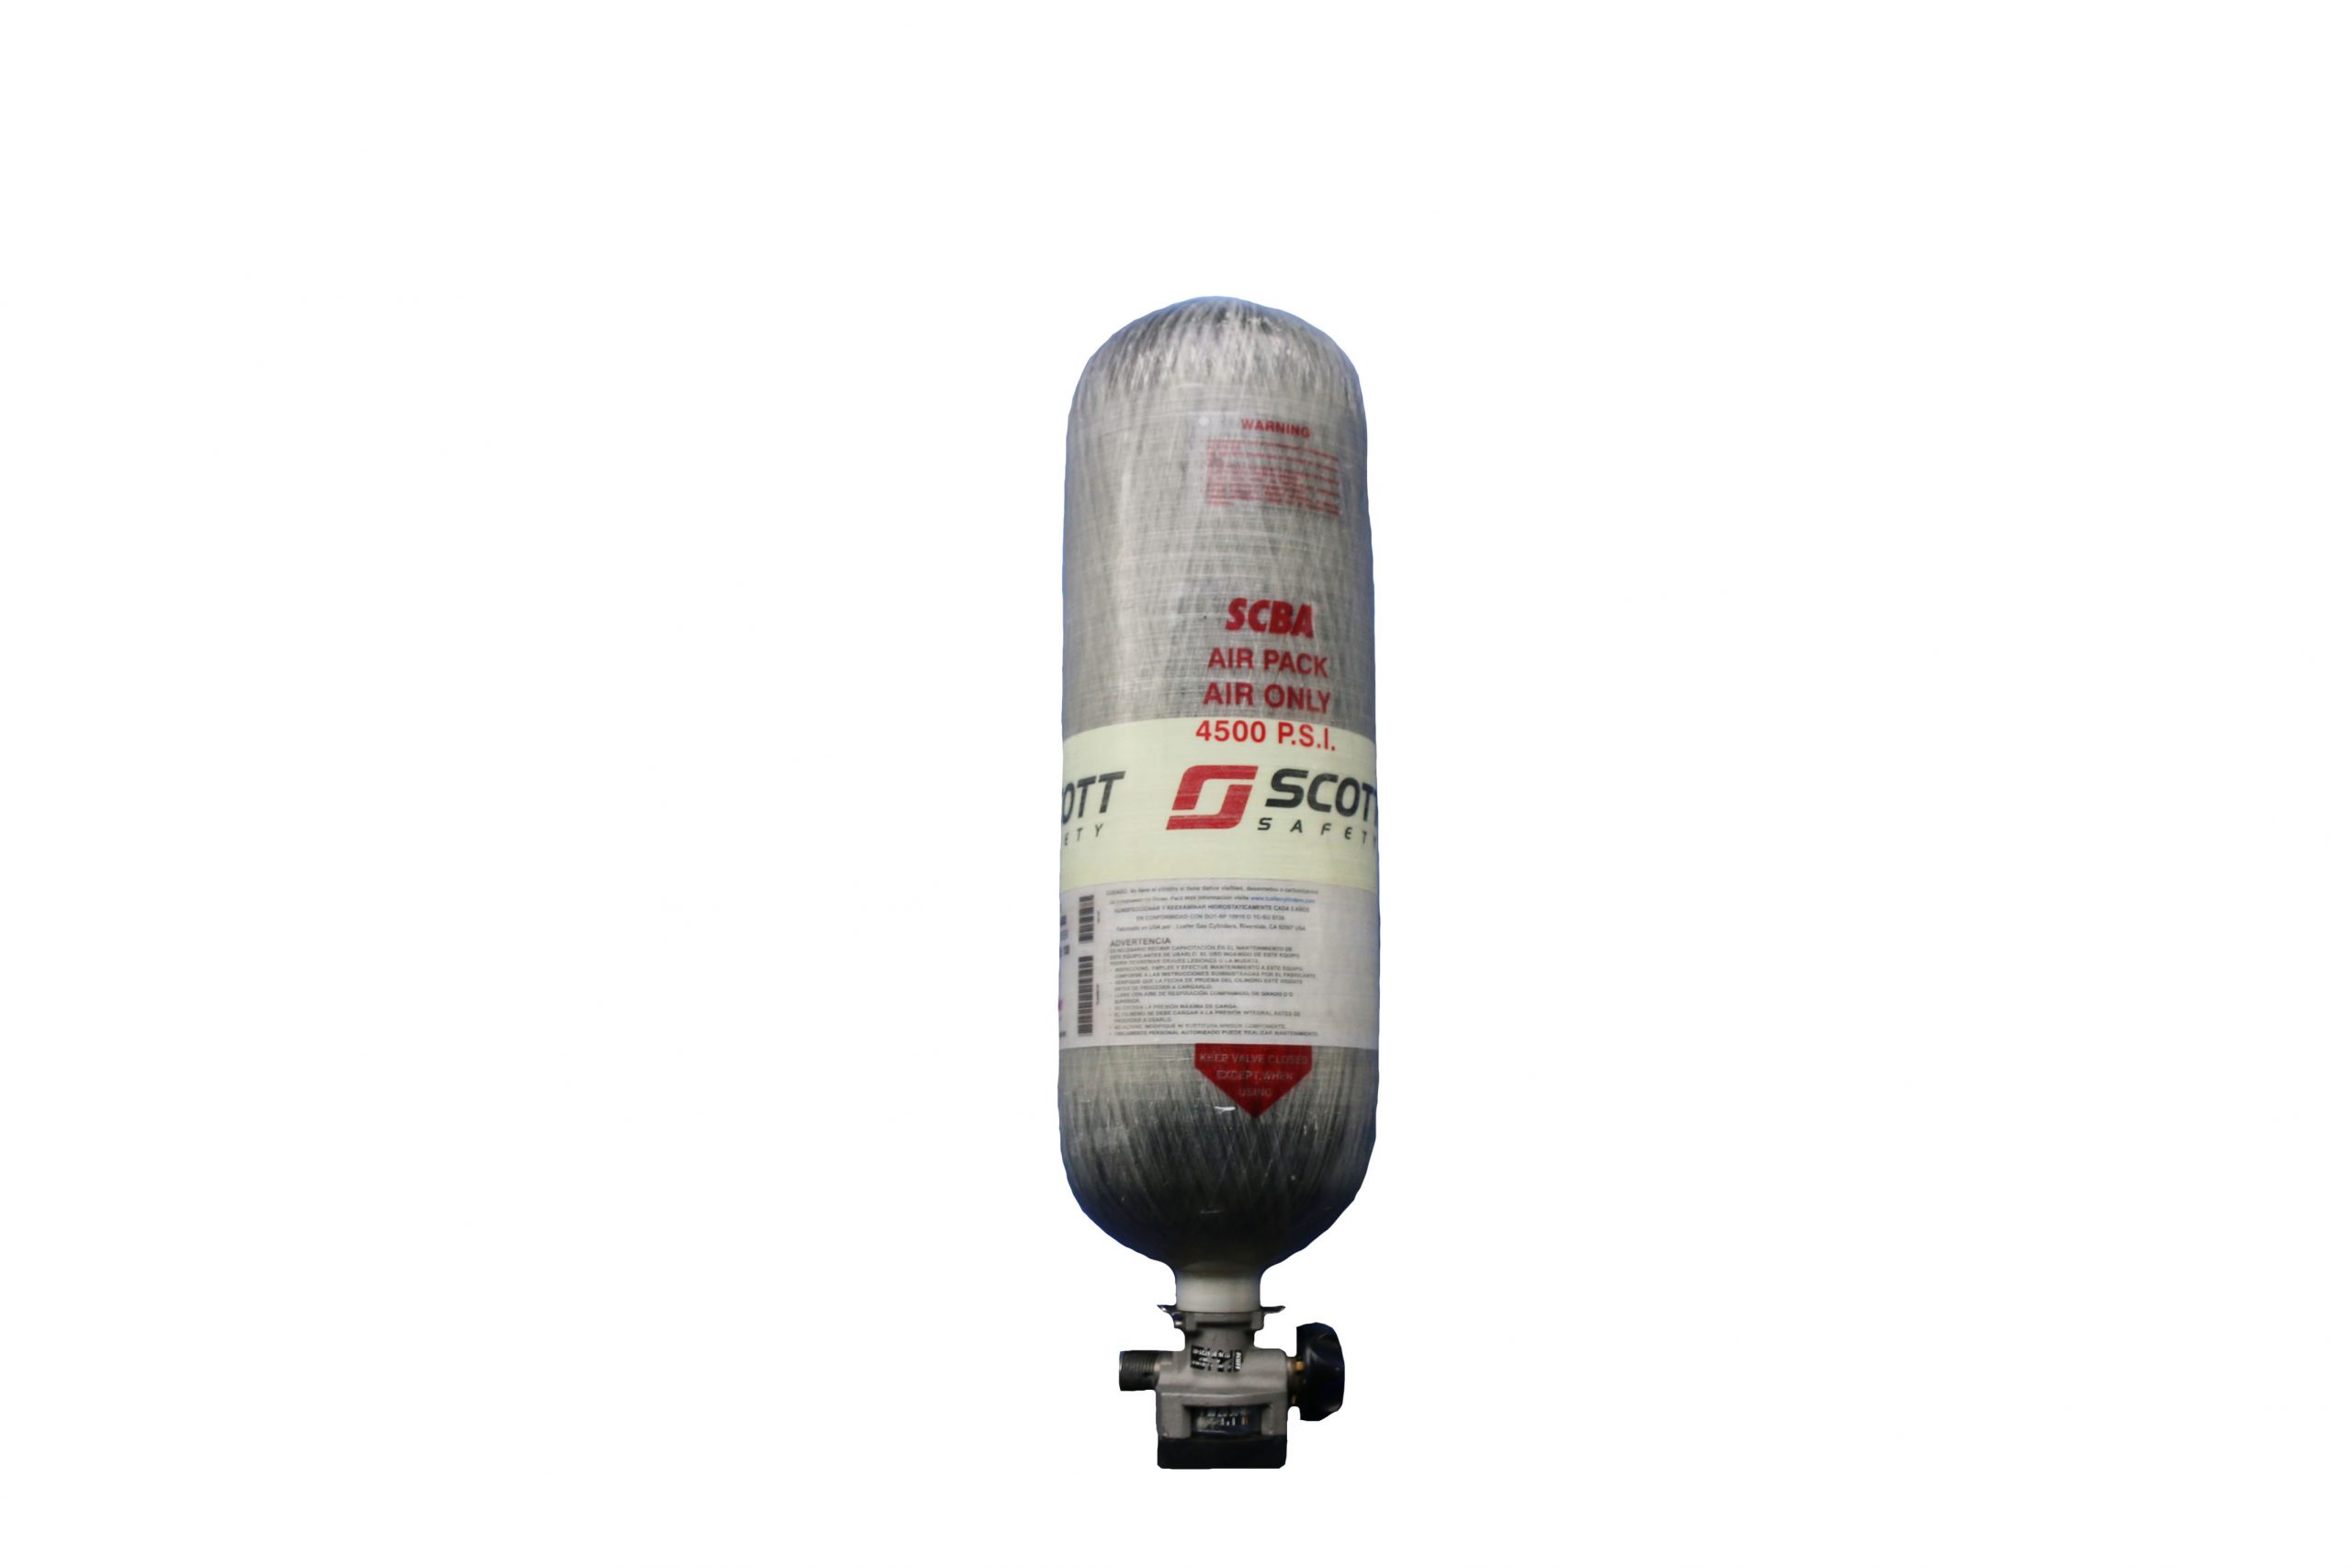 Scott 4500psi 30min Oxygen Fire Hydro SCBA Air Pak Bottle Cylinder Tank w/ Valve 